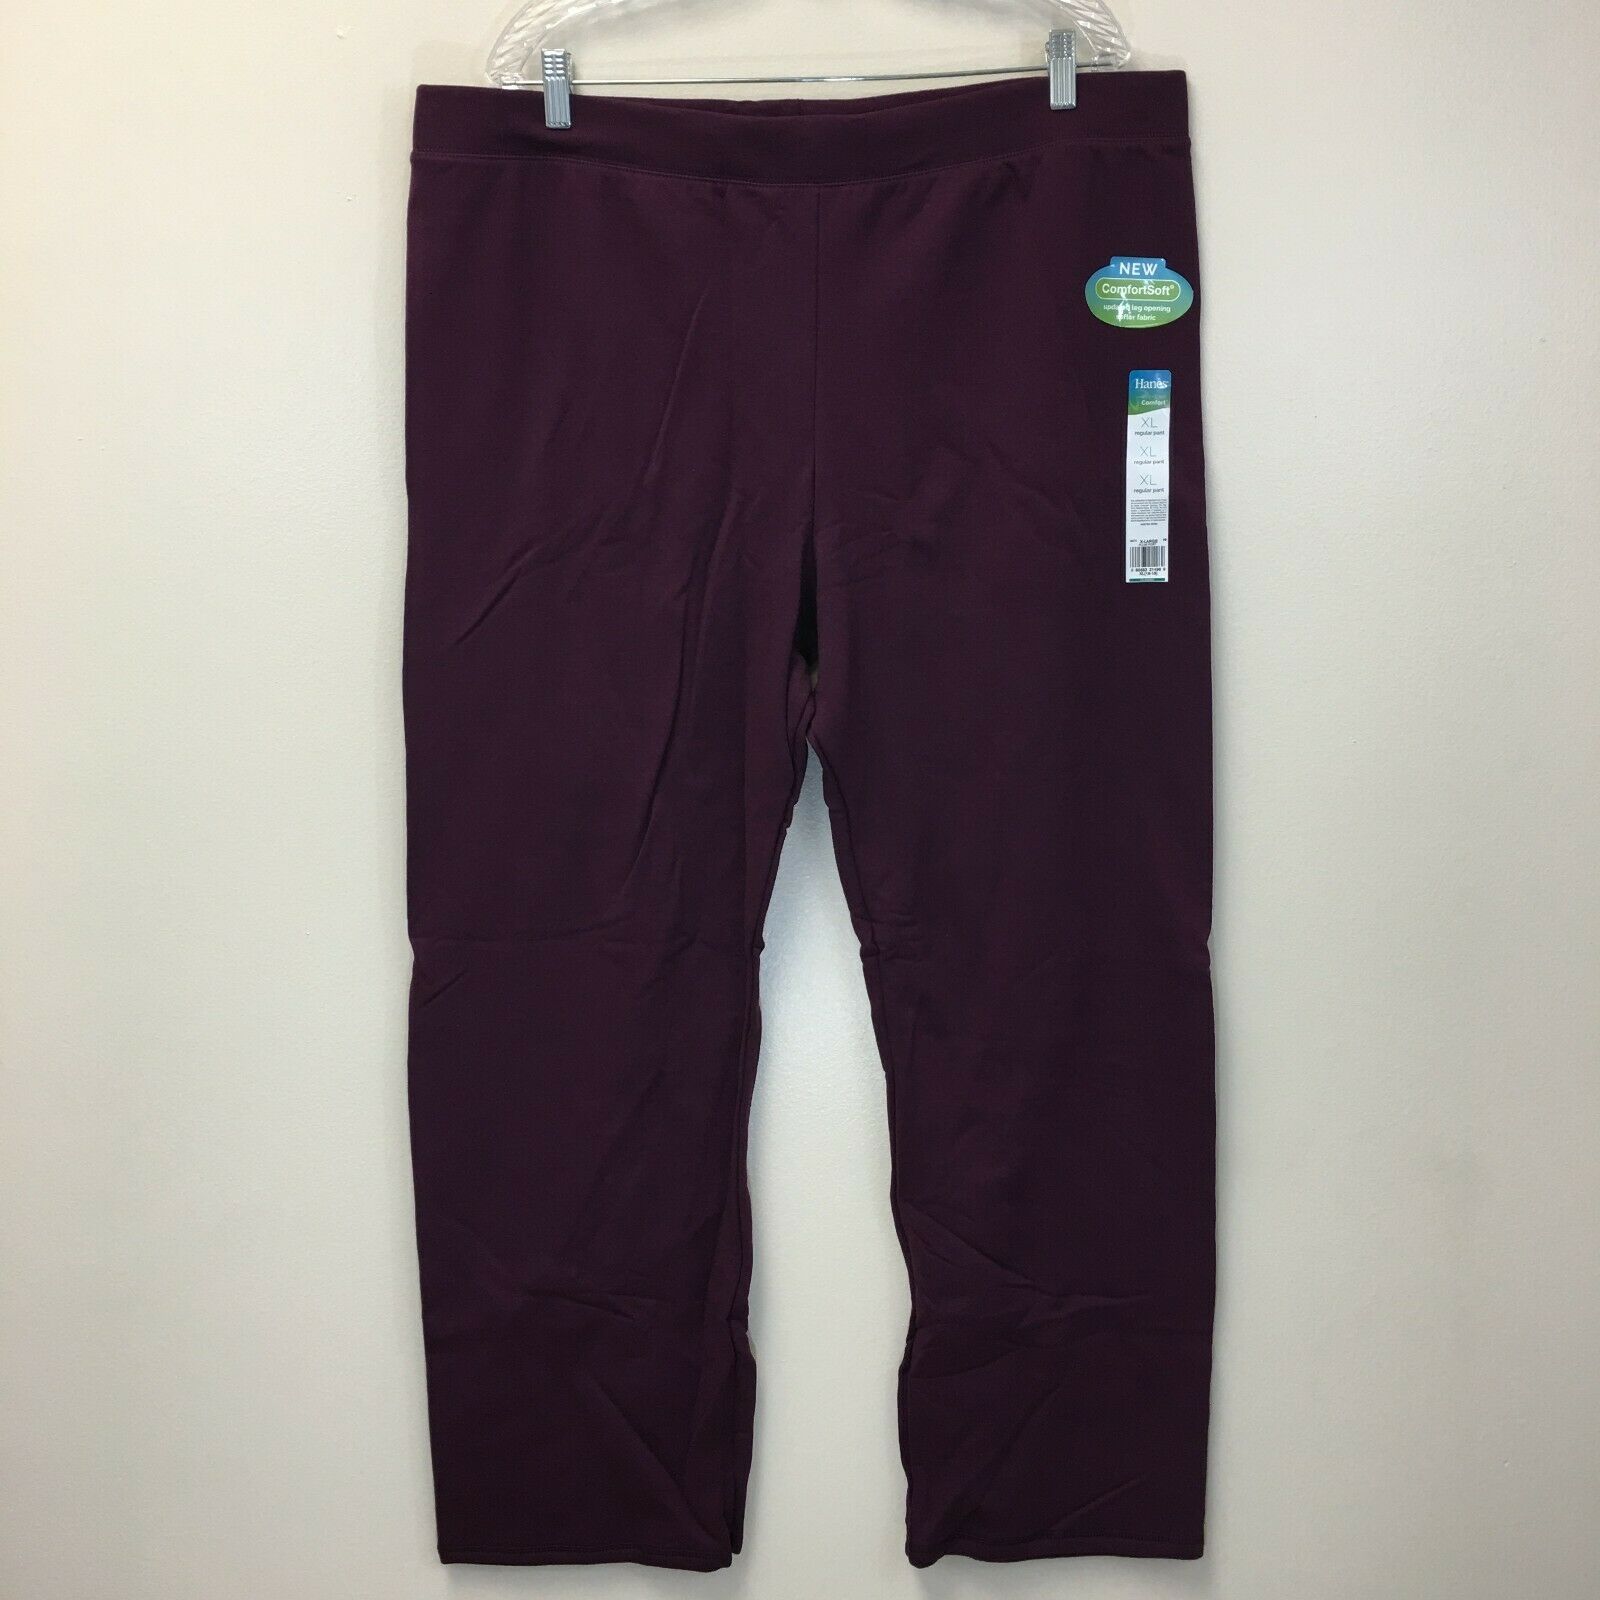 Hanes ComfortSoft Women's Open Bottom Leg Fleece Sweatpants, Purple, XL (16-18)